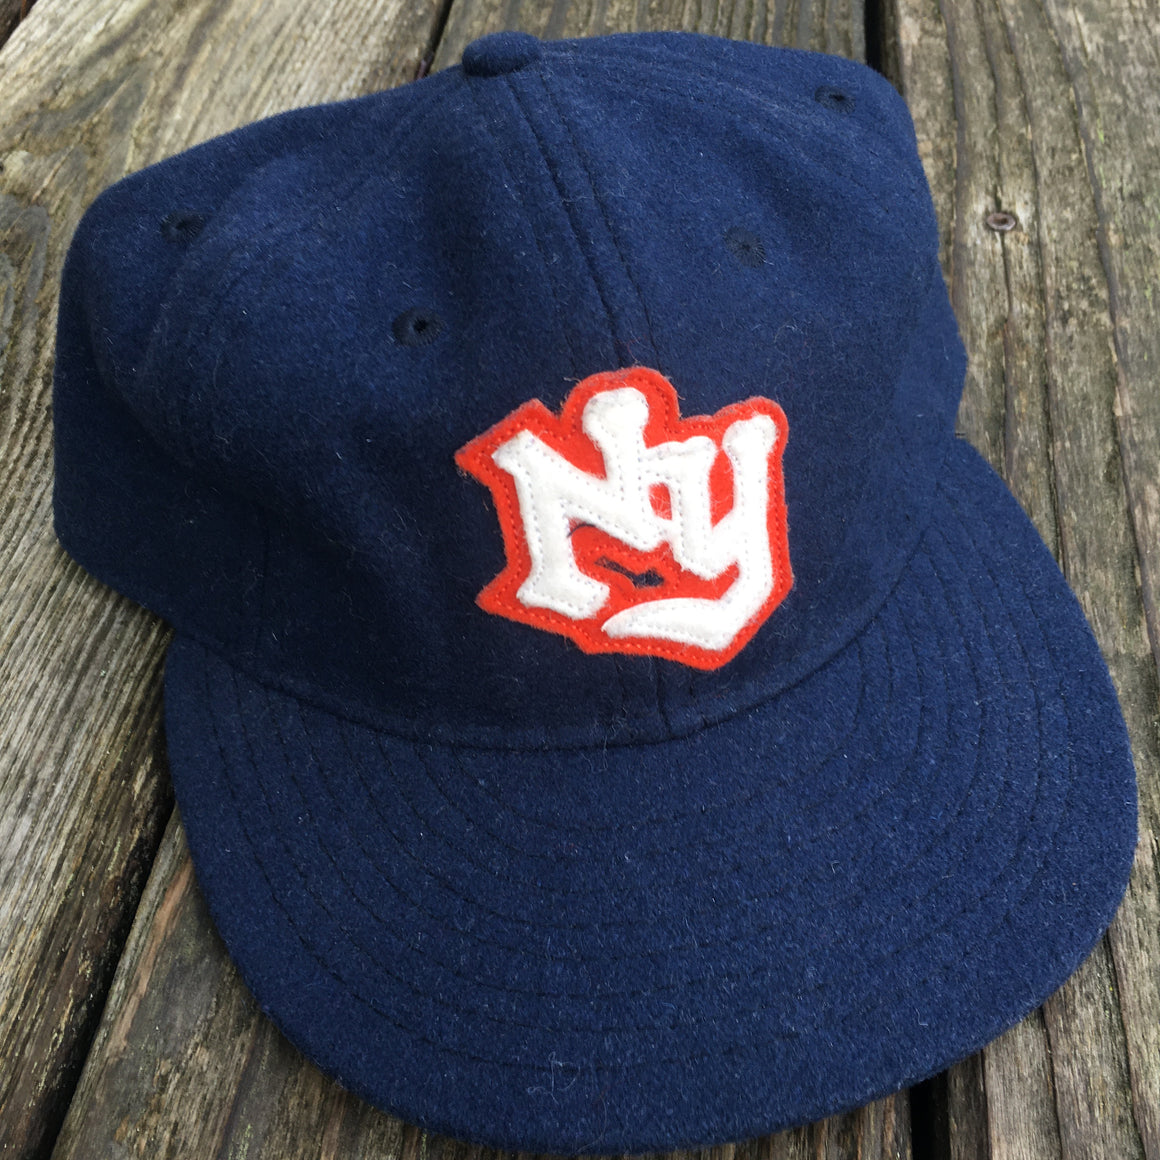 New York Knights hat - size 7 5/8